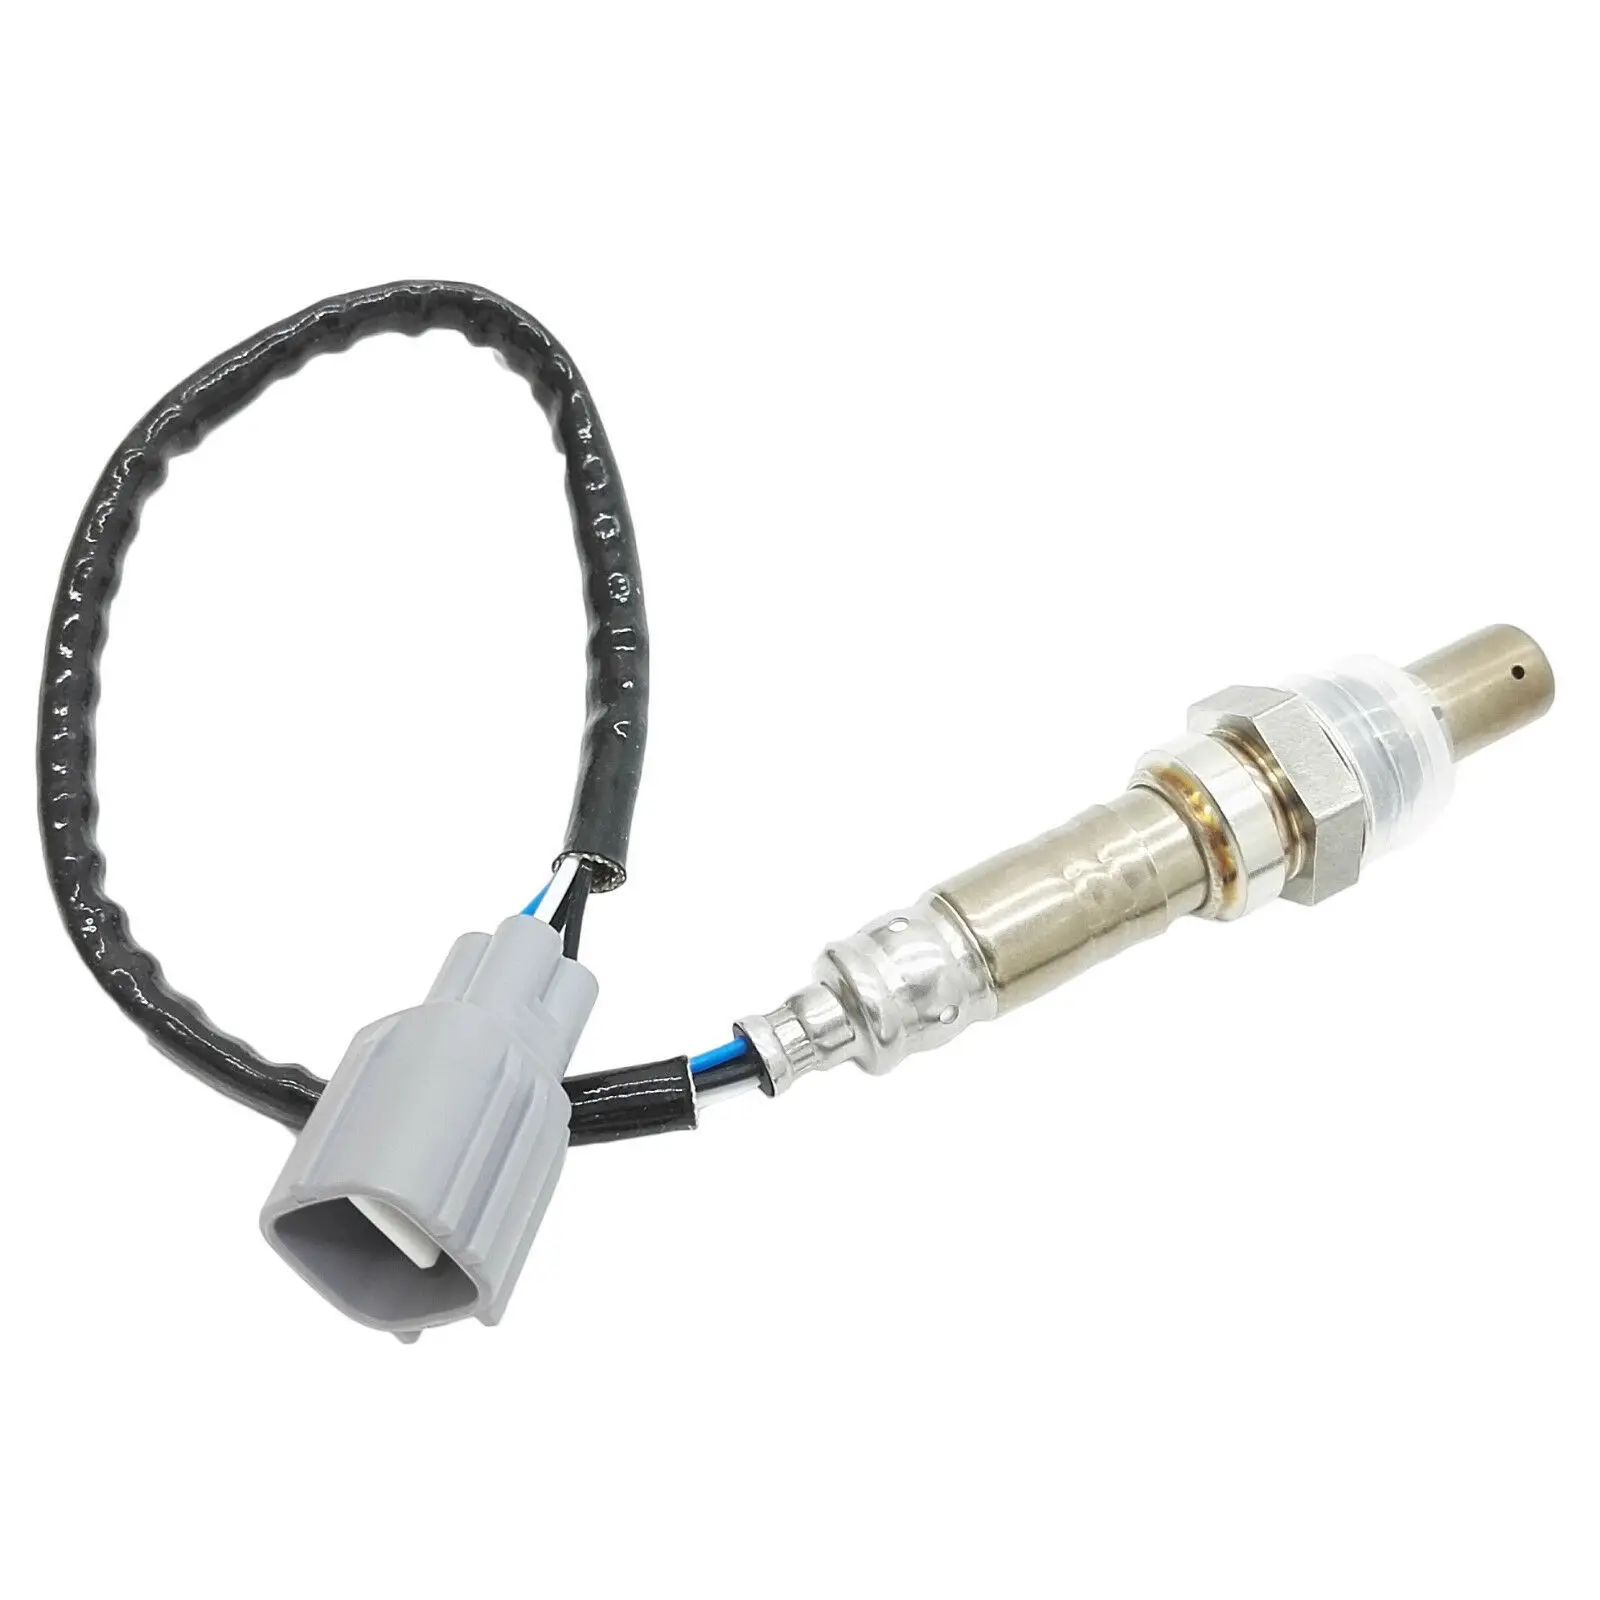 Air Fuel Ratio Oxygen Sensor for Toyota for Lexus 234-9009 Parts Accessories